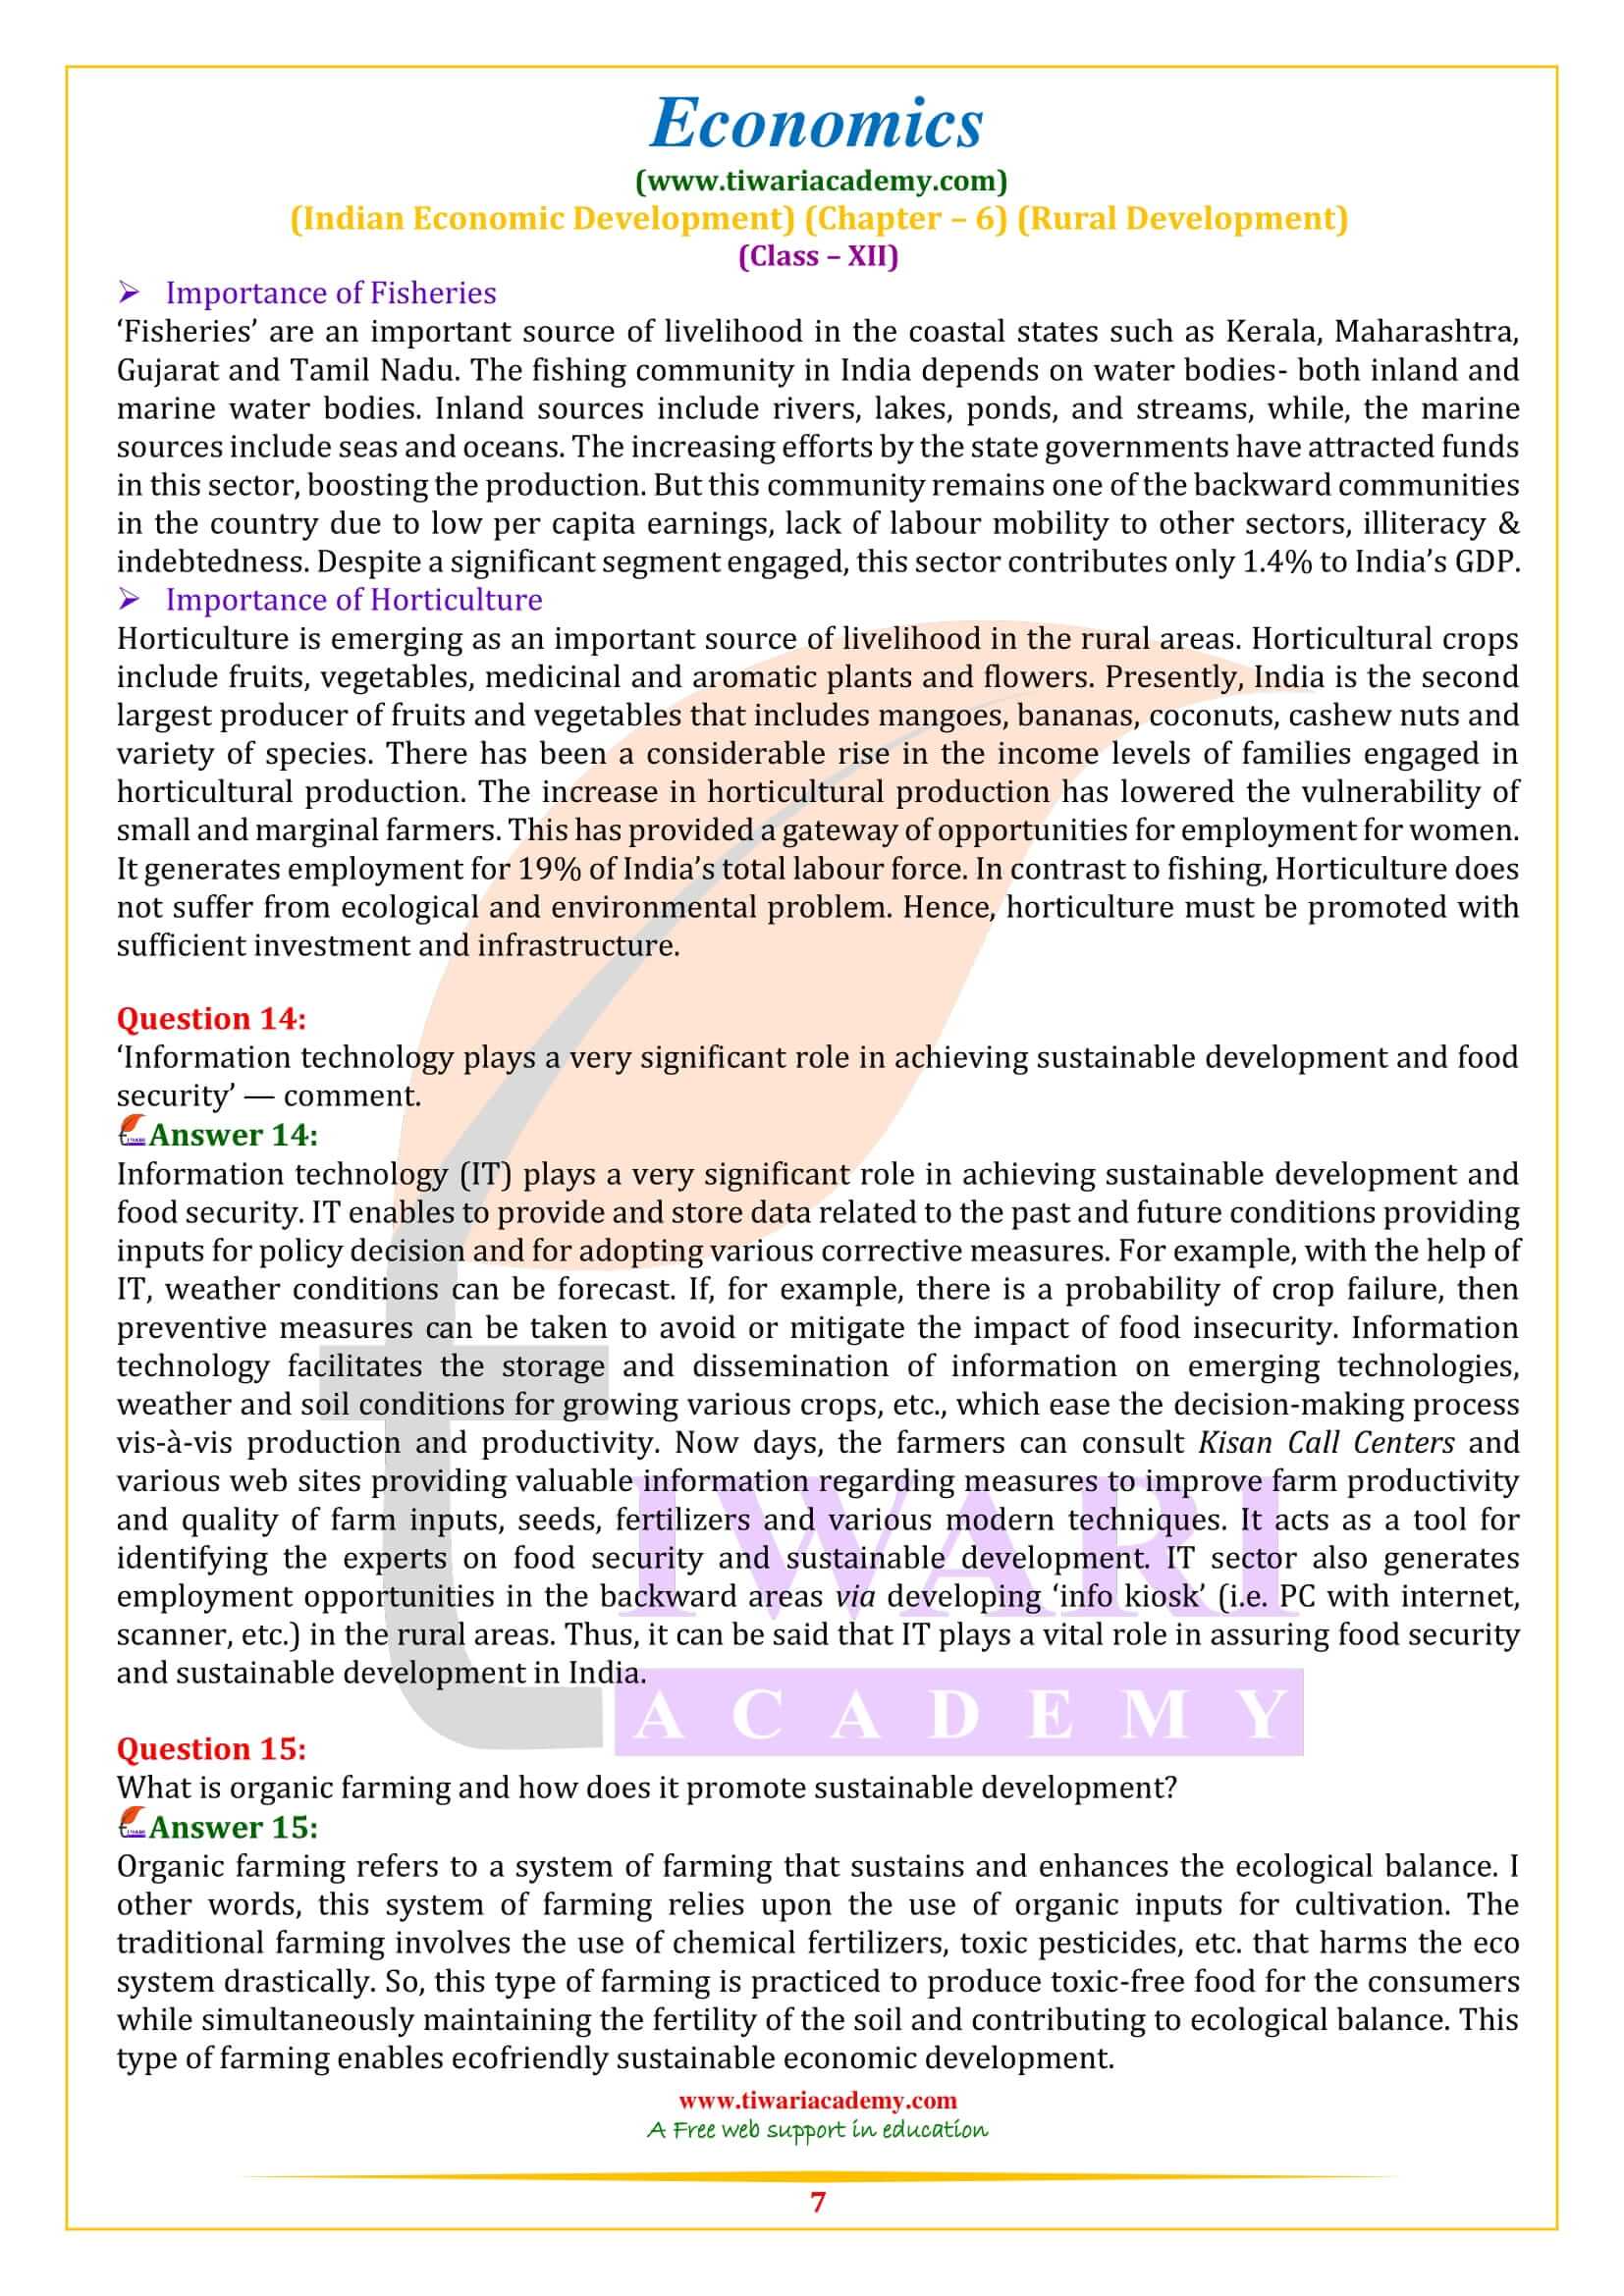 Class 12 Indian Economic Development Chapter 6 Solutions